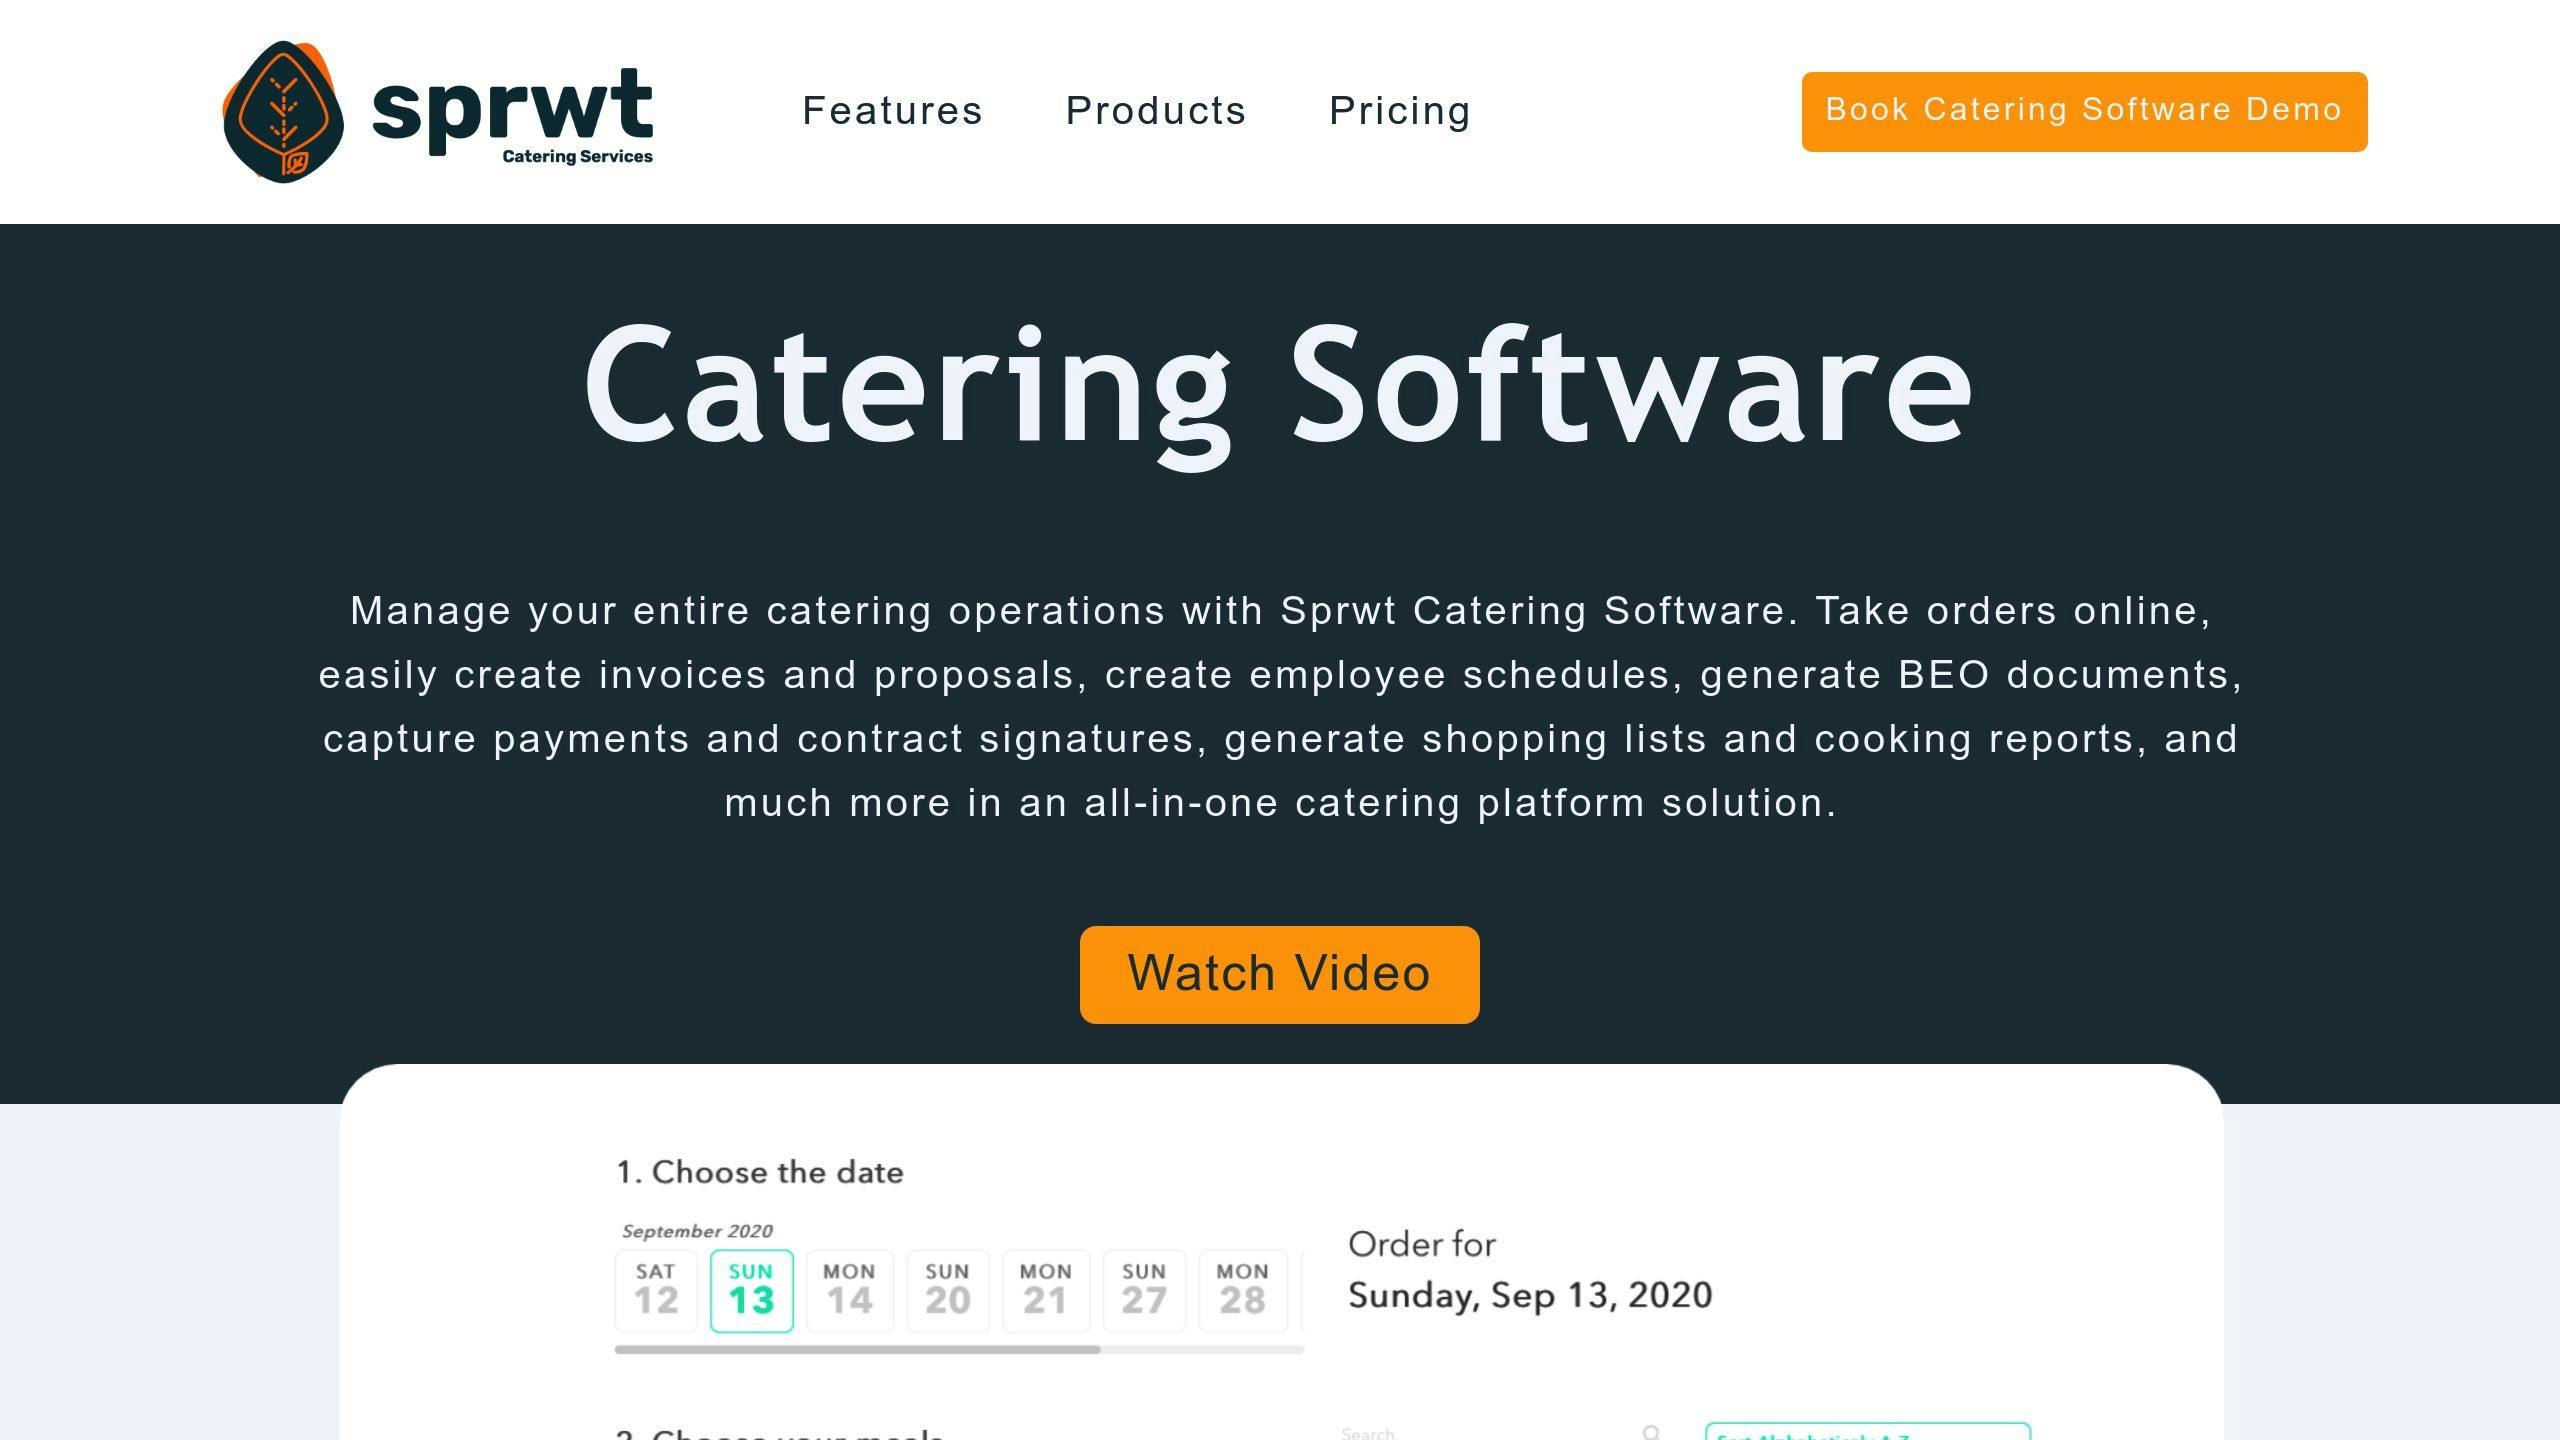 Sprwt's Catering Software